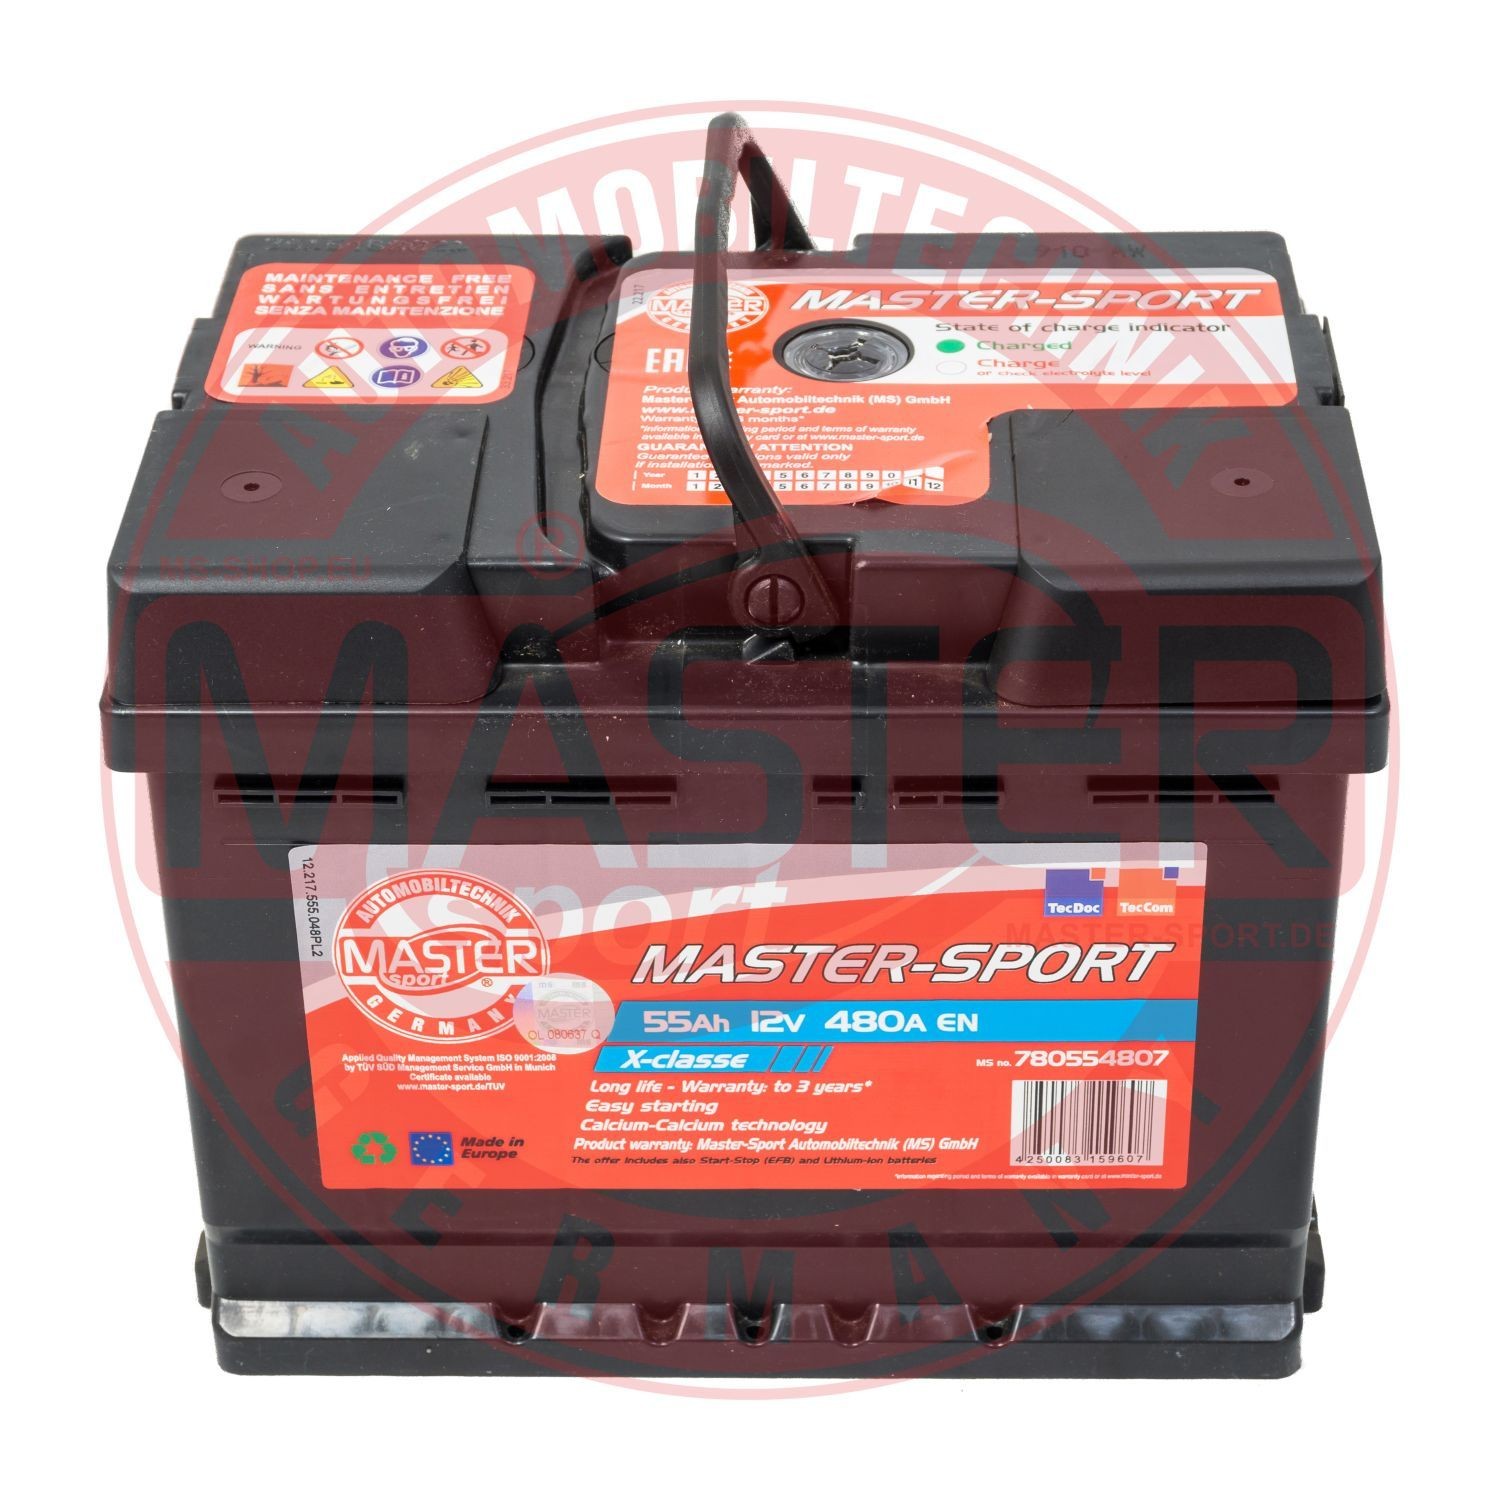 MASTER-SPORT 750554802 Battery Z25 5559